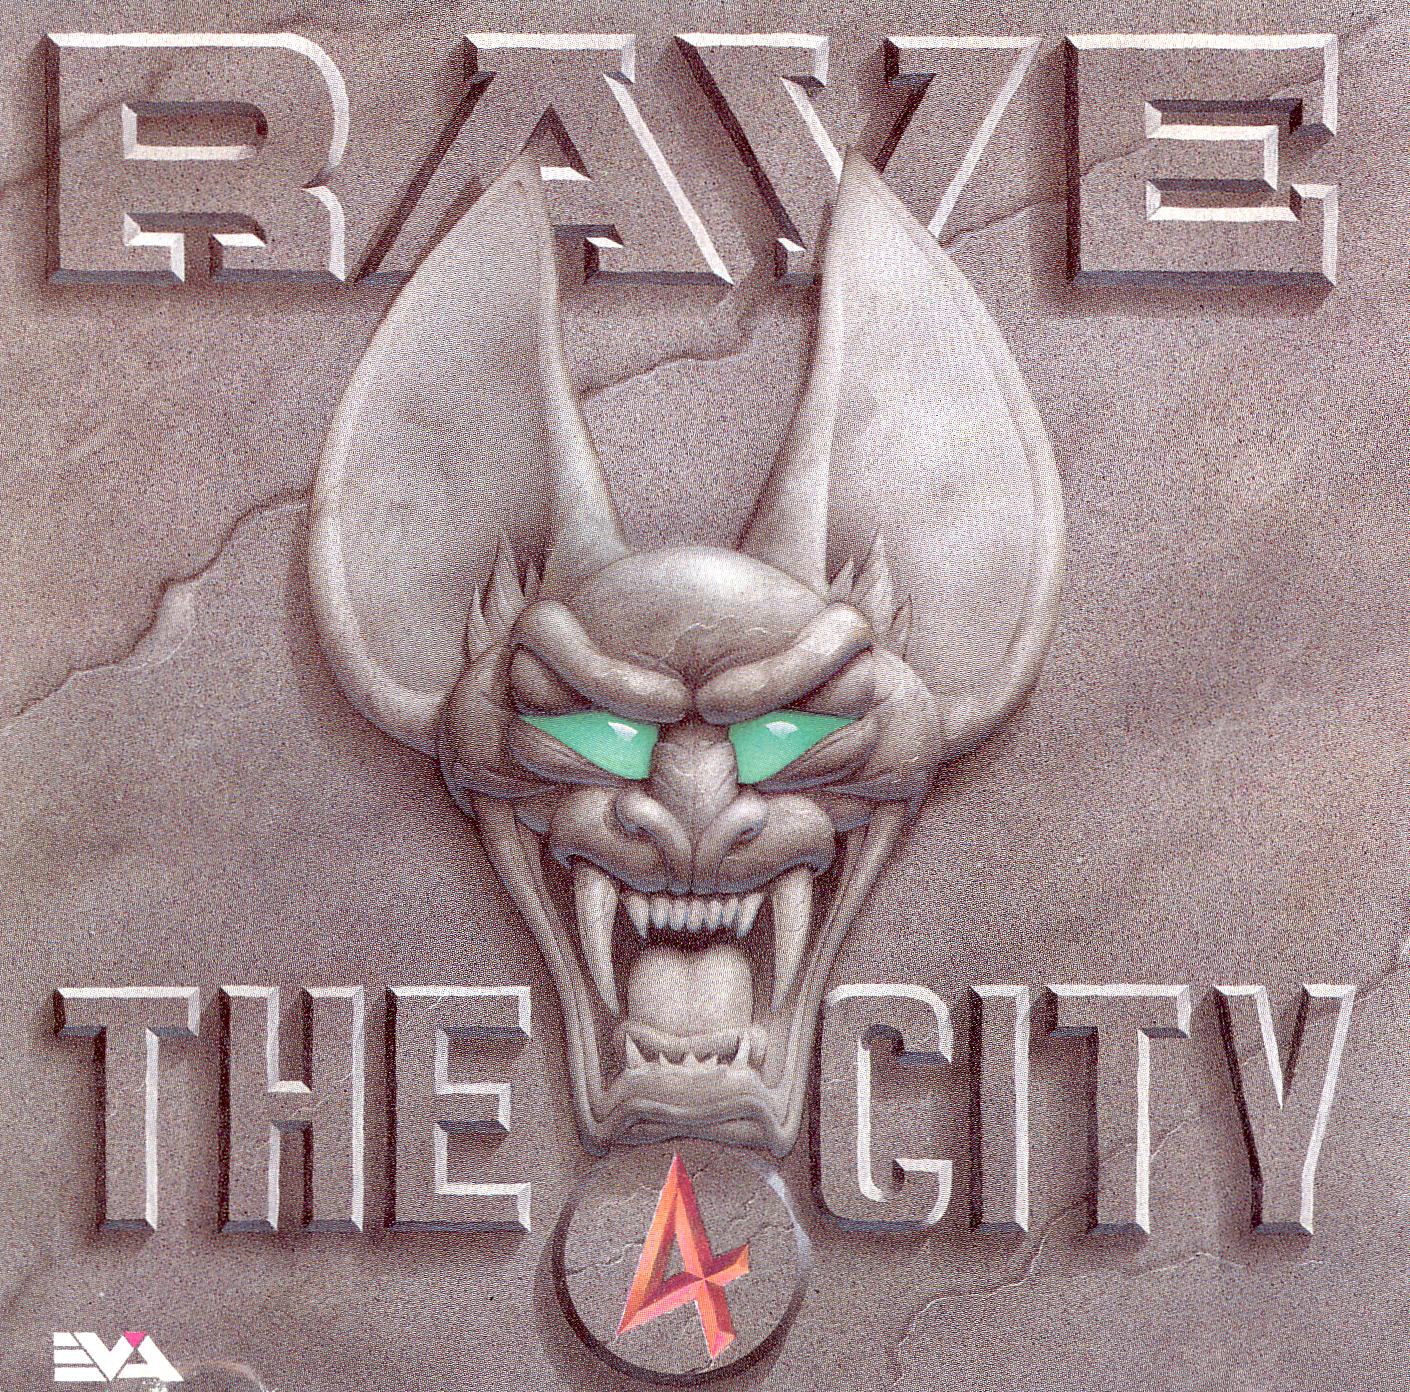 Rave The City Collectie (1993-1996)